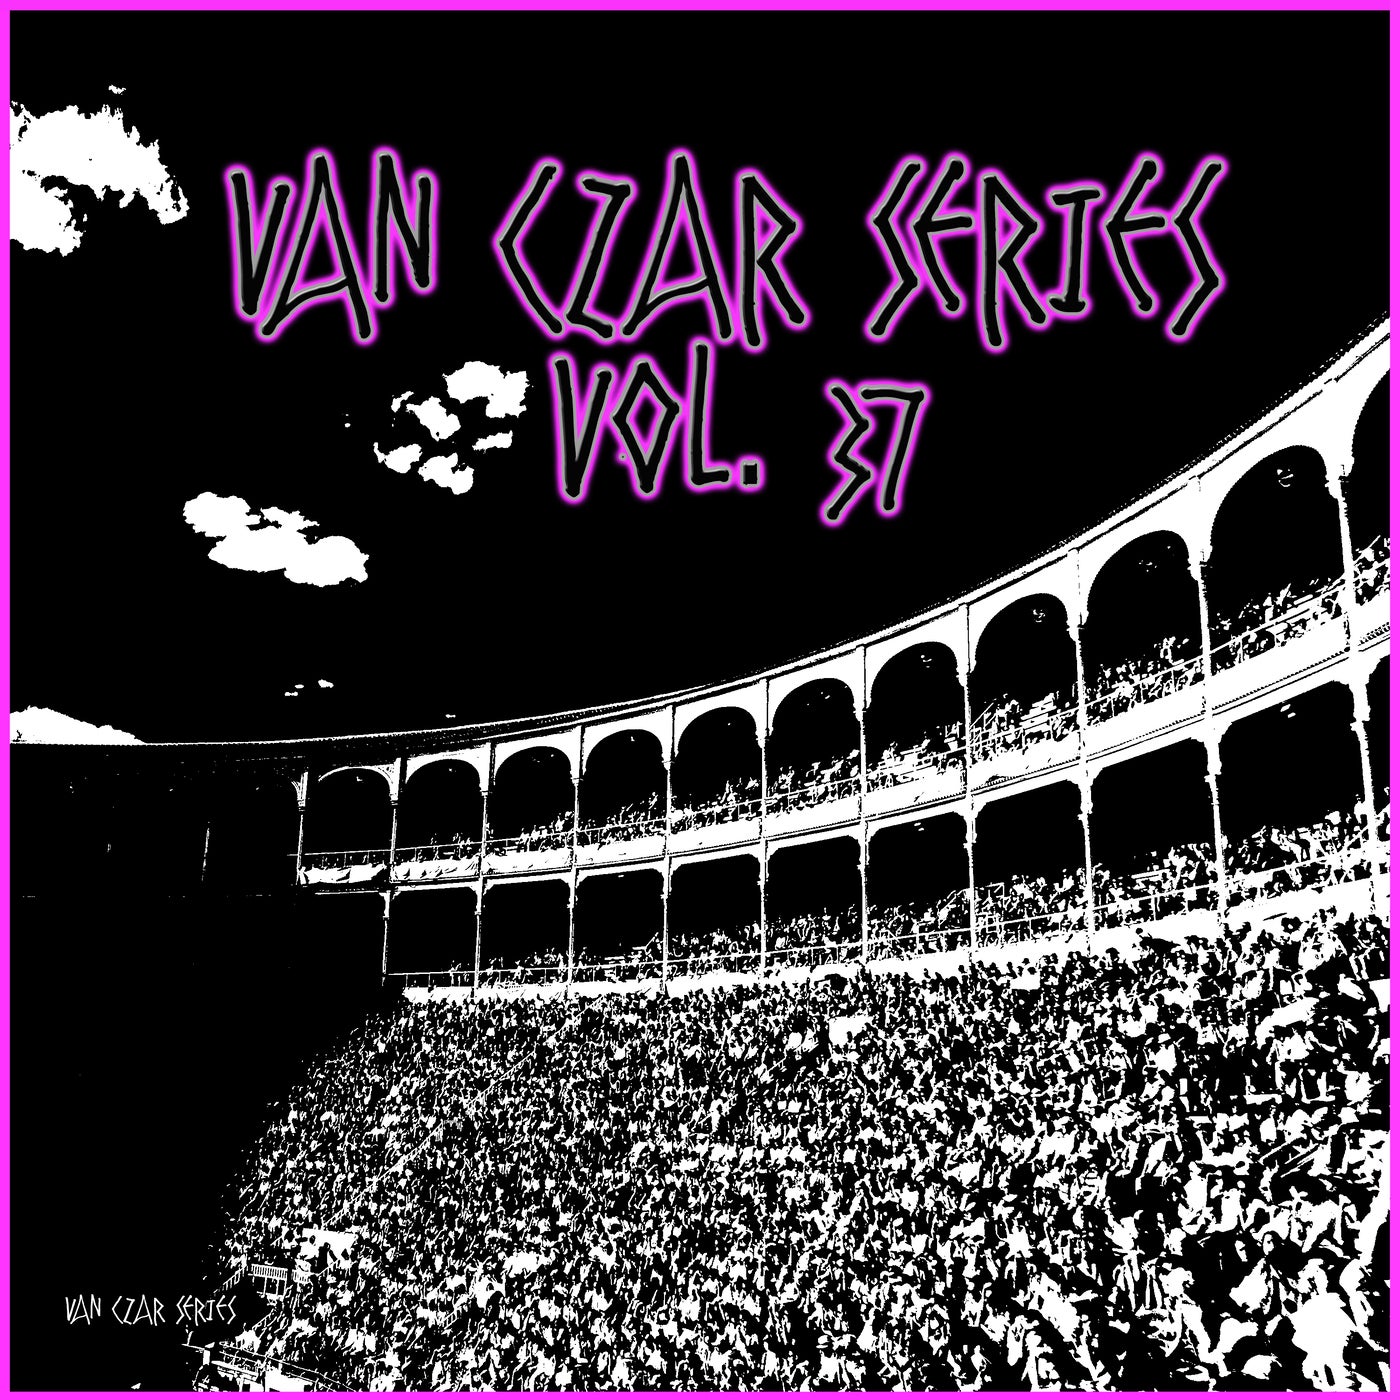 Van Czar Series, Vol. 37